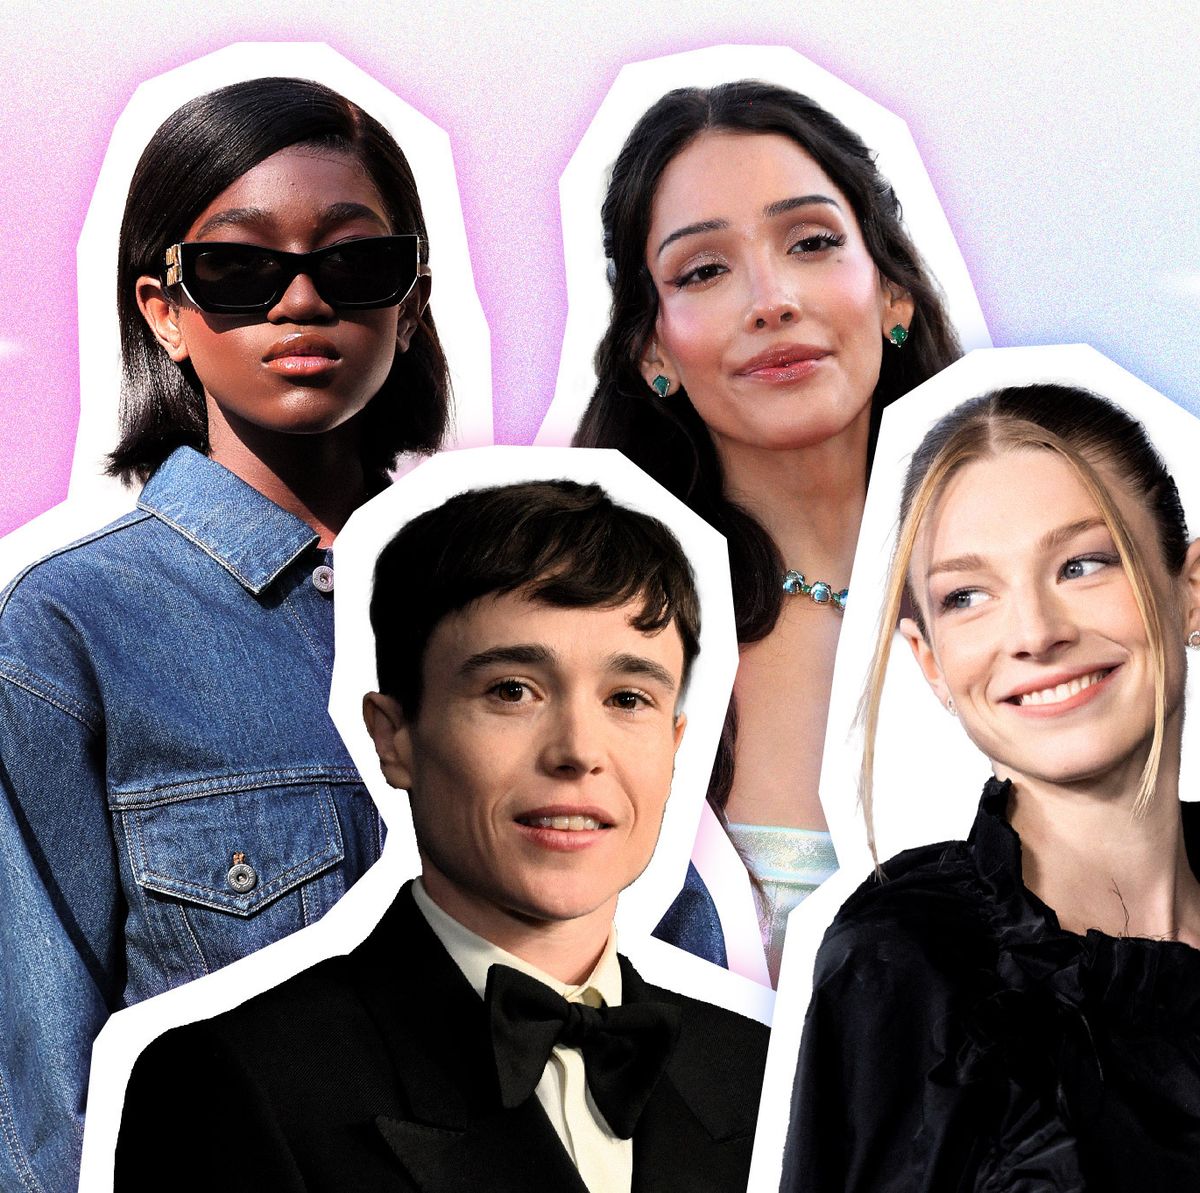 49 Transgender Celebrities to Know - Trans Actors Breaking Boundaries